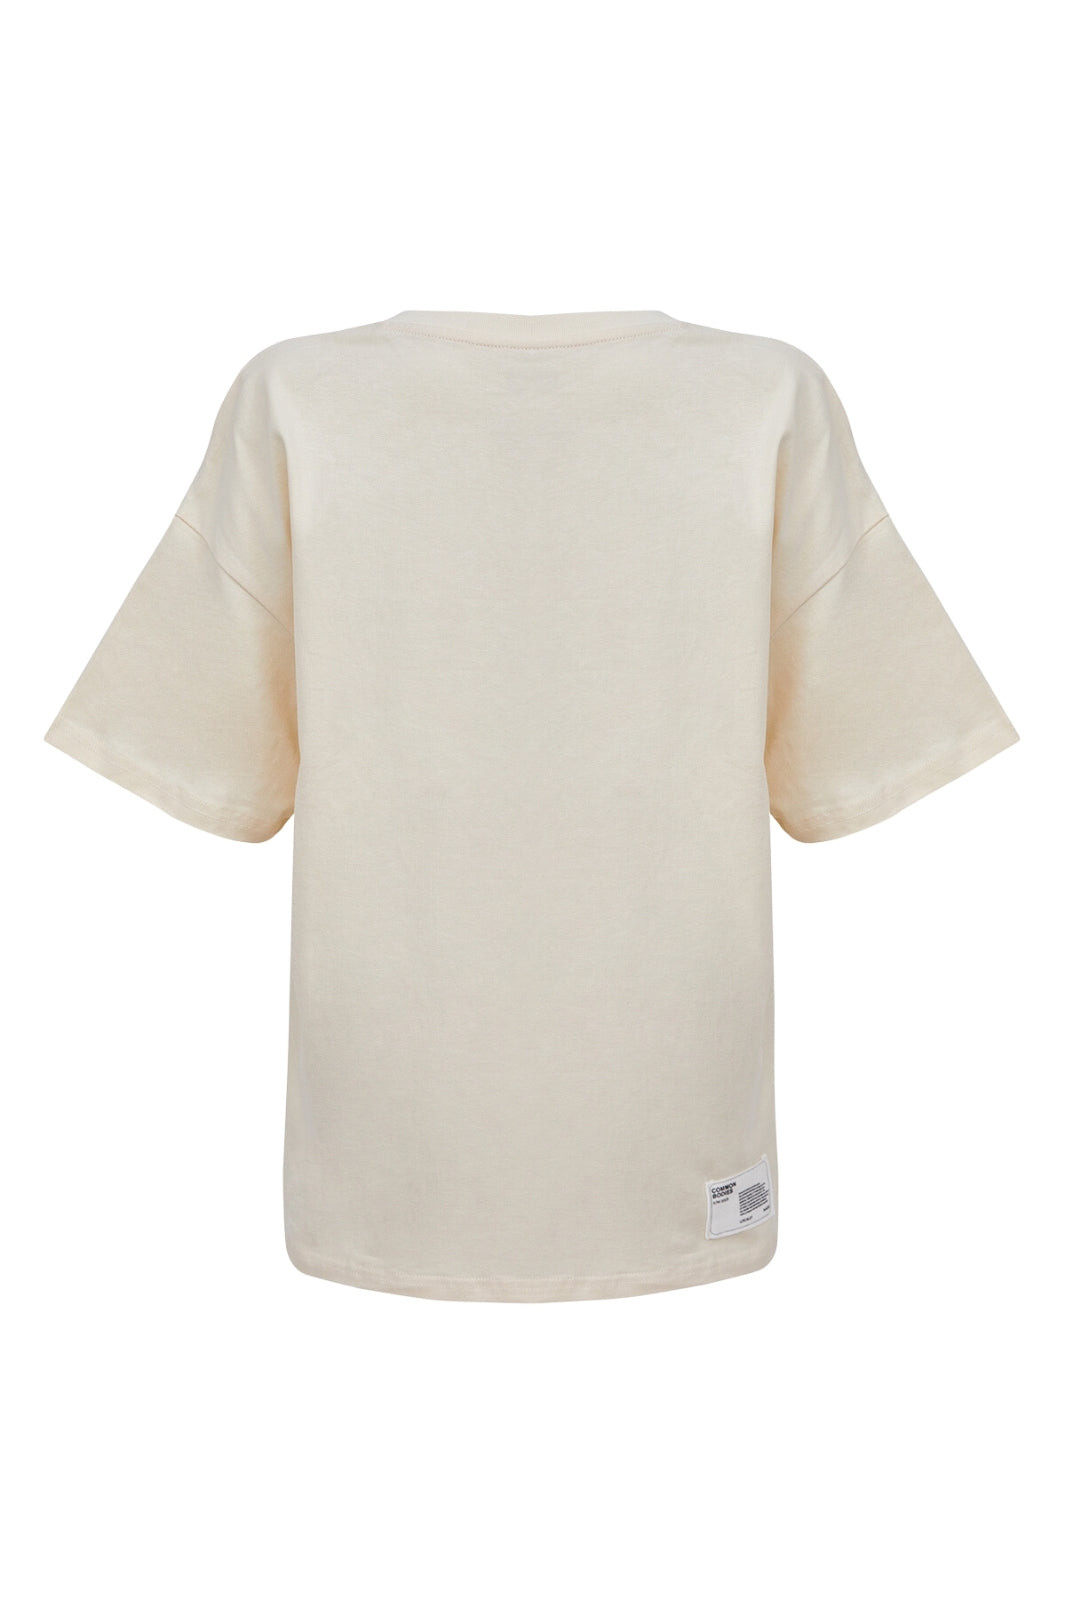 Common Bodies T-shirt in Latte (Unisex)